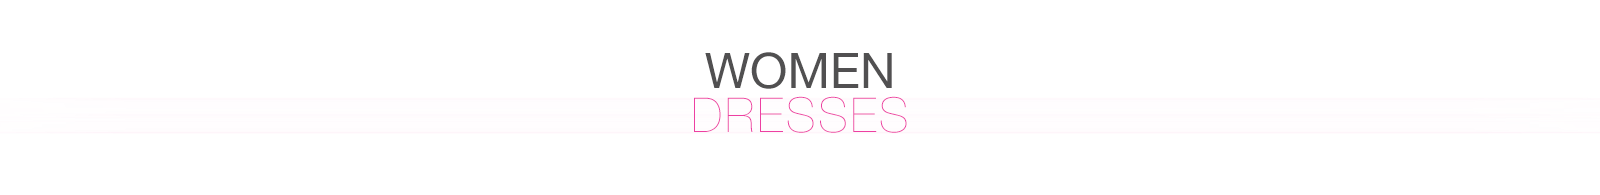 WOMEN - Dresses